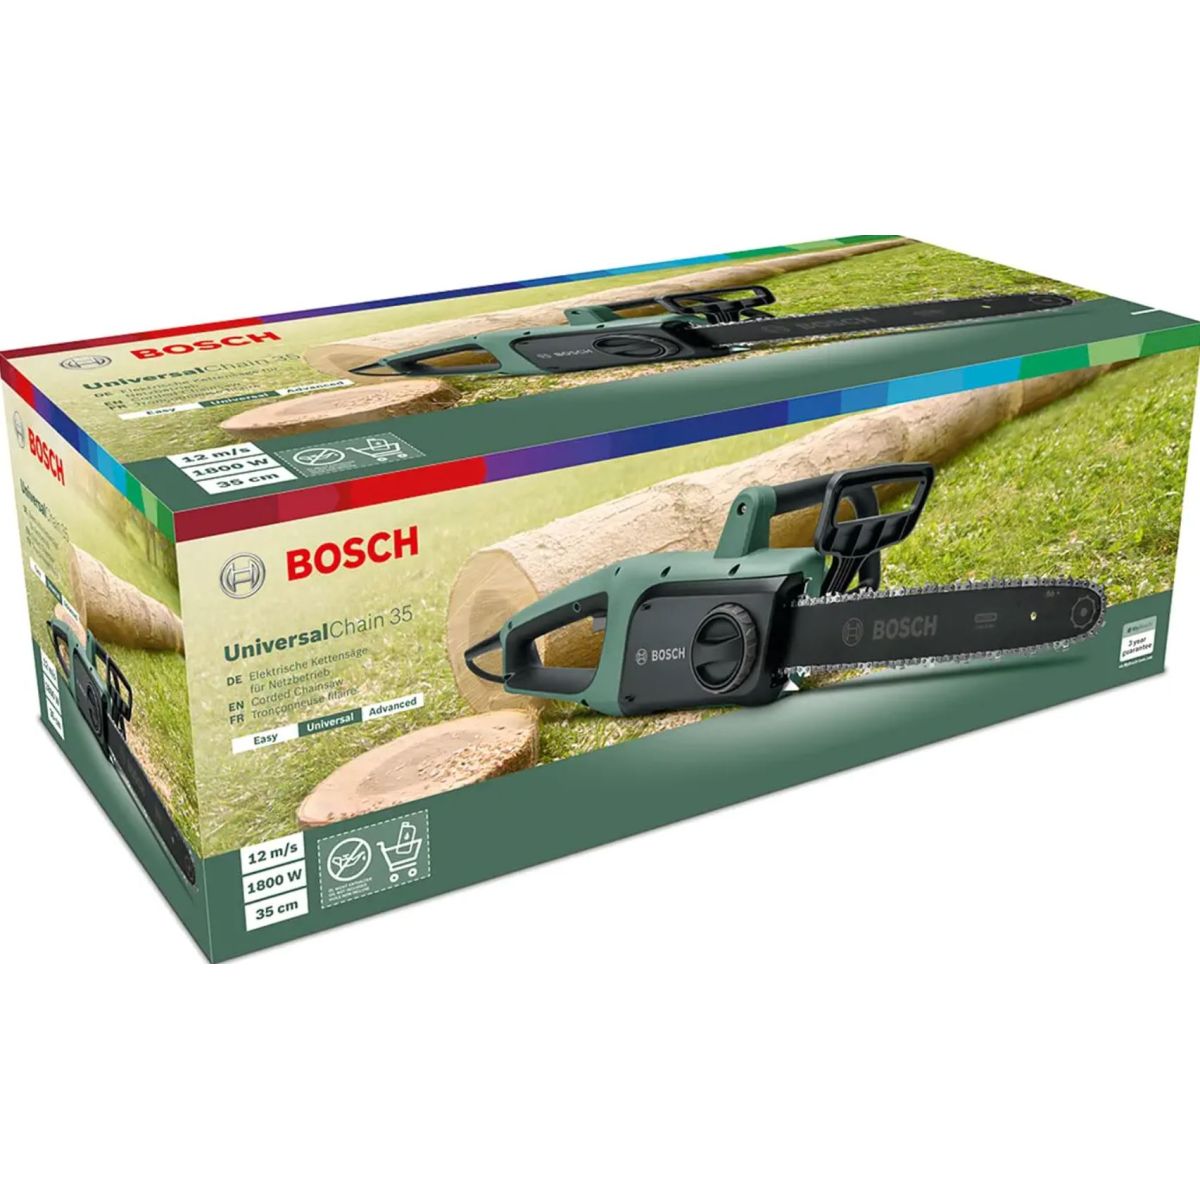 Bosch Tronçonneuse 1800W UniversalChain 35 (06008B8300)